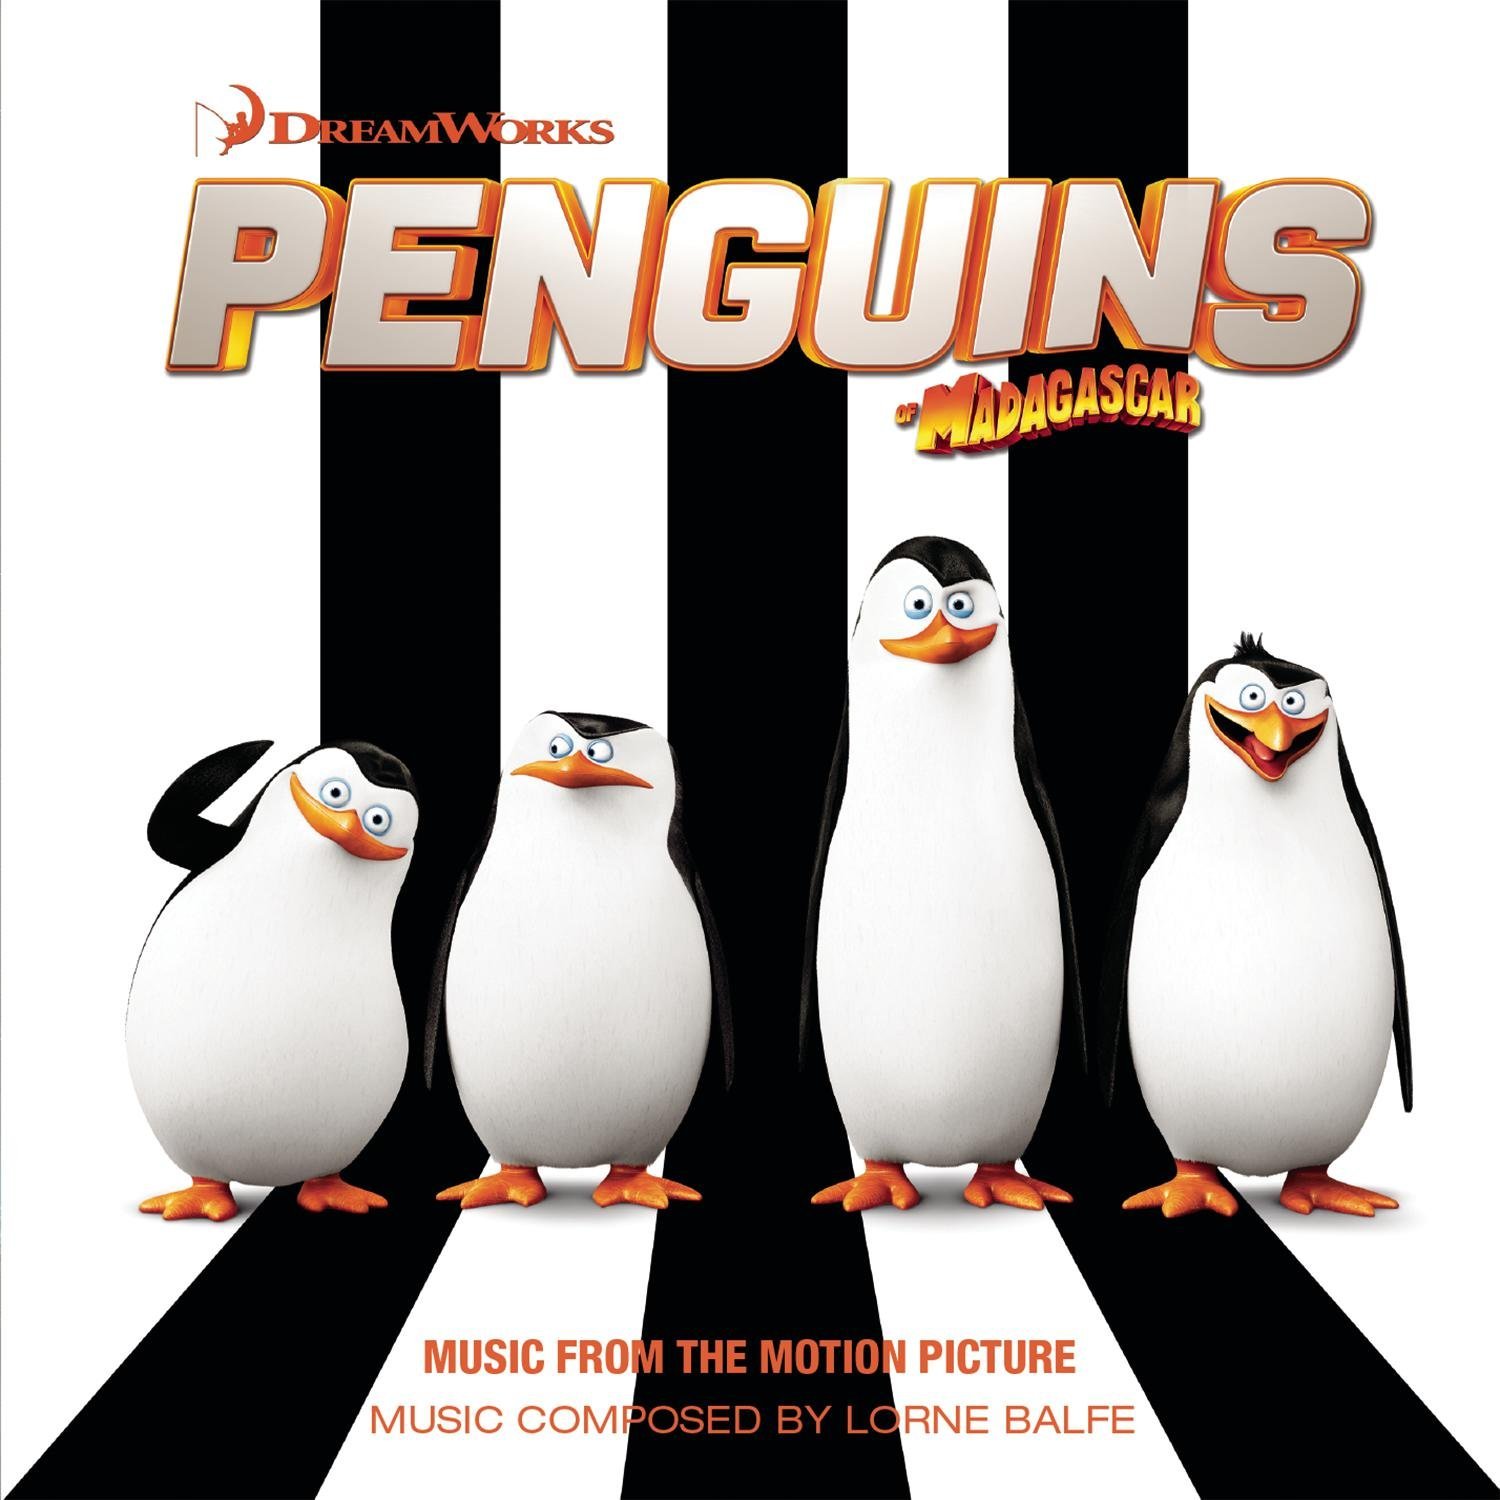 Penguins Of Madagascar Backgrounds, Compatible - PC, Mobile, Gadgets| 1500x1500 px